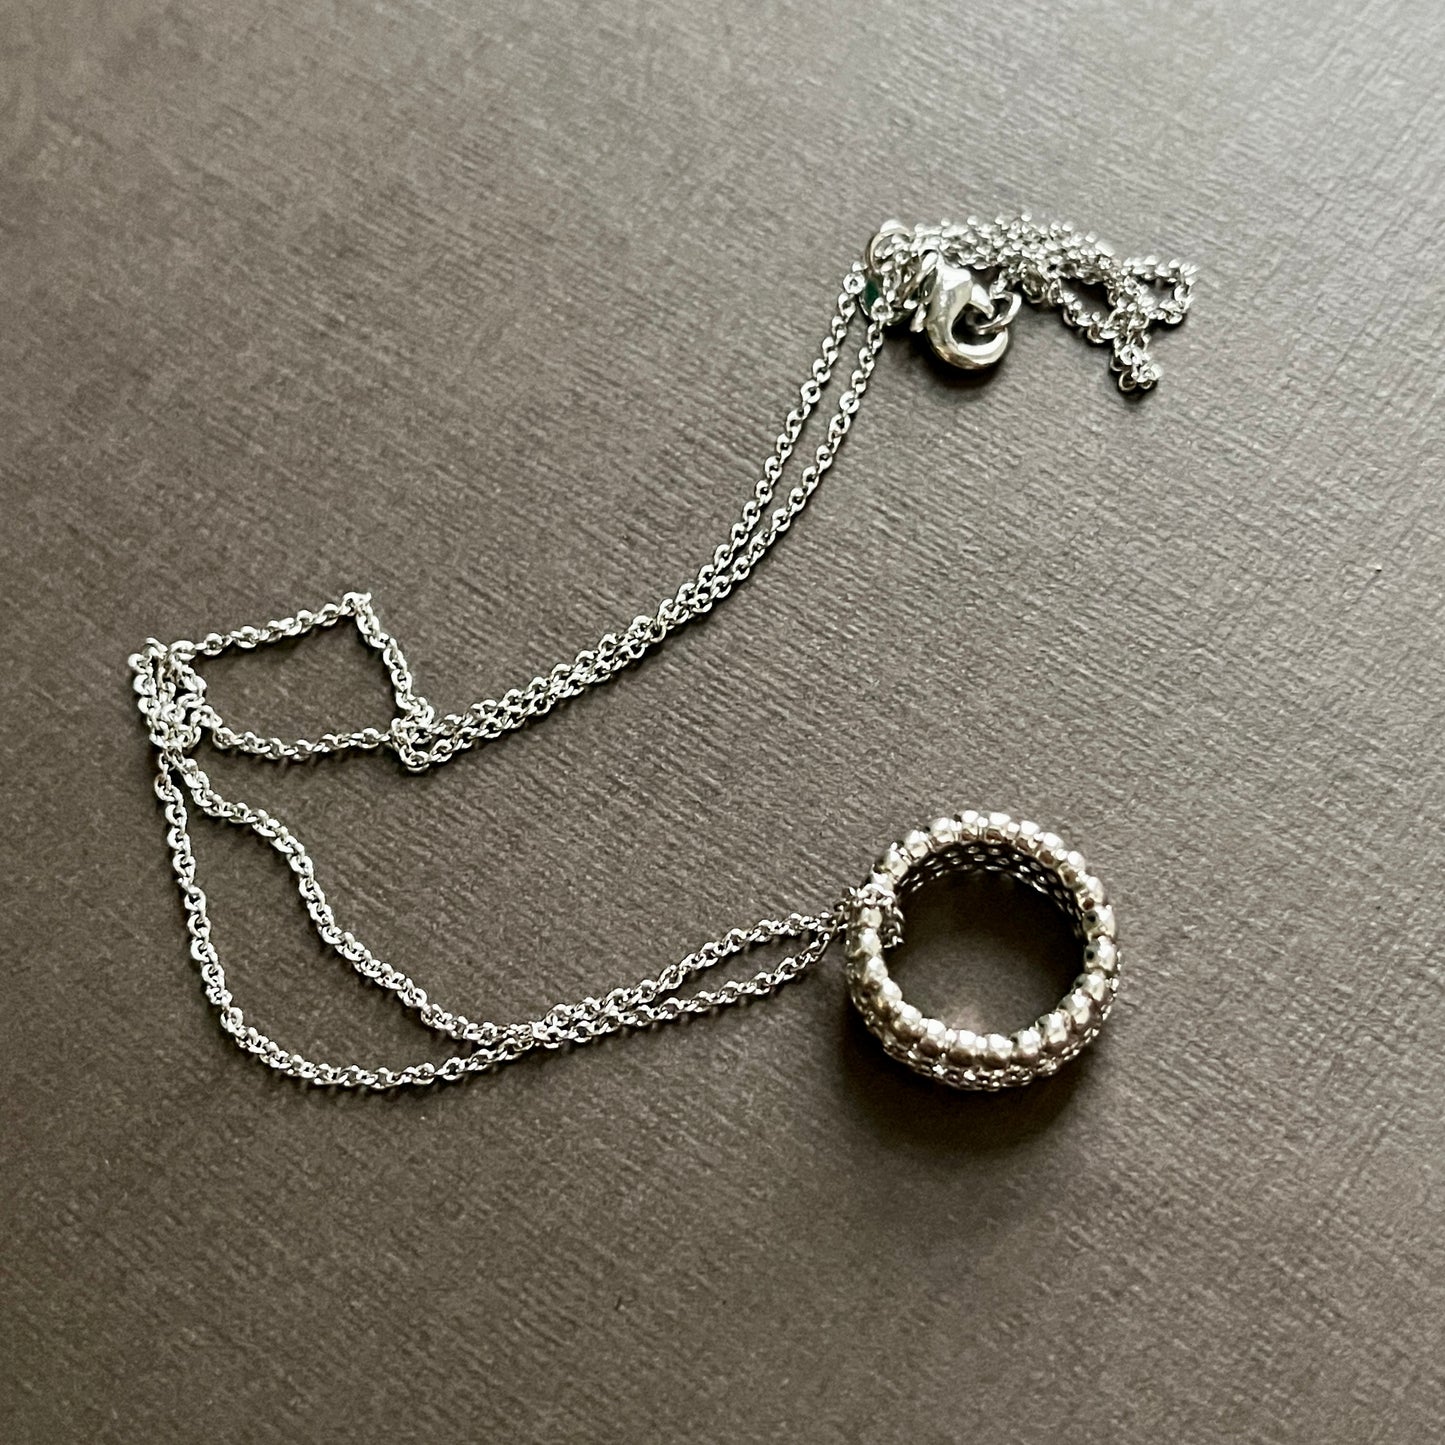 Little Ring Pendant Necklace